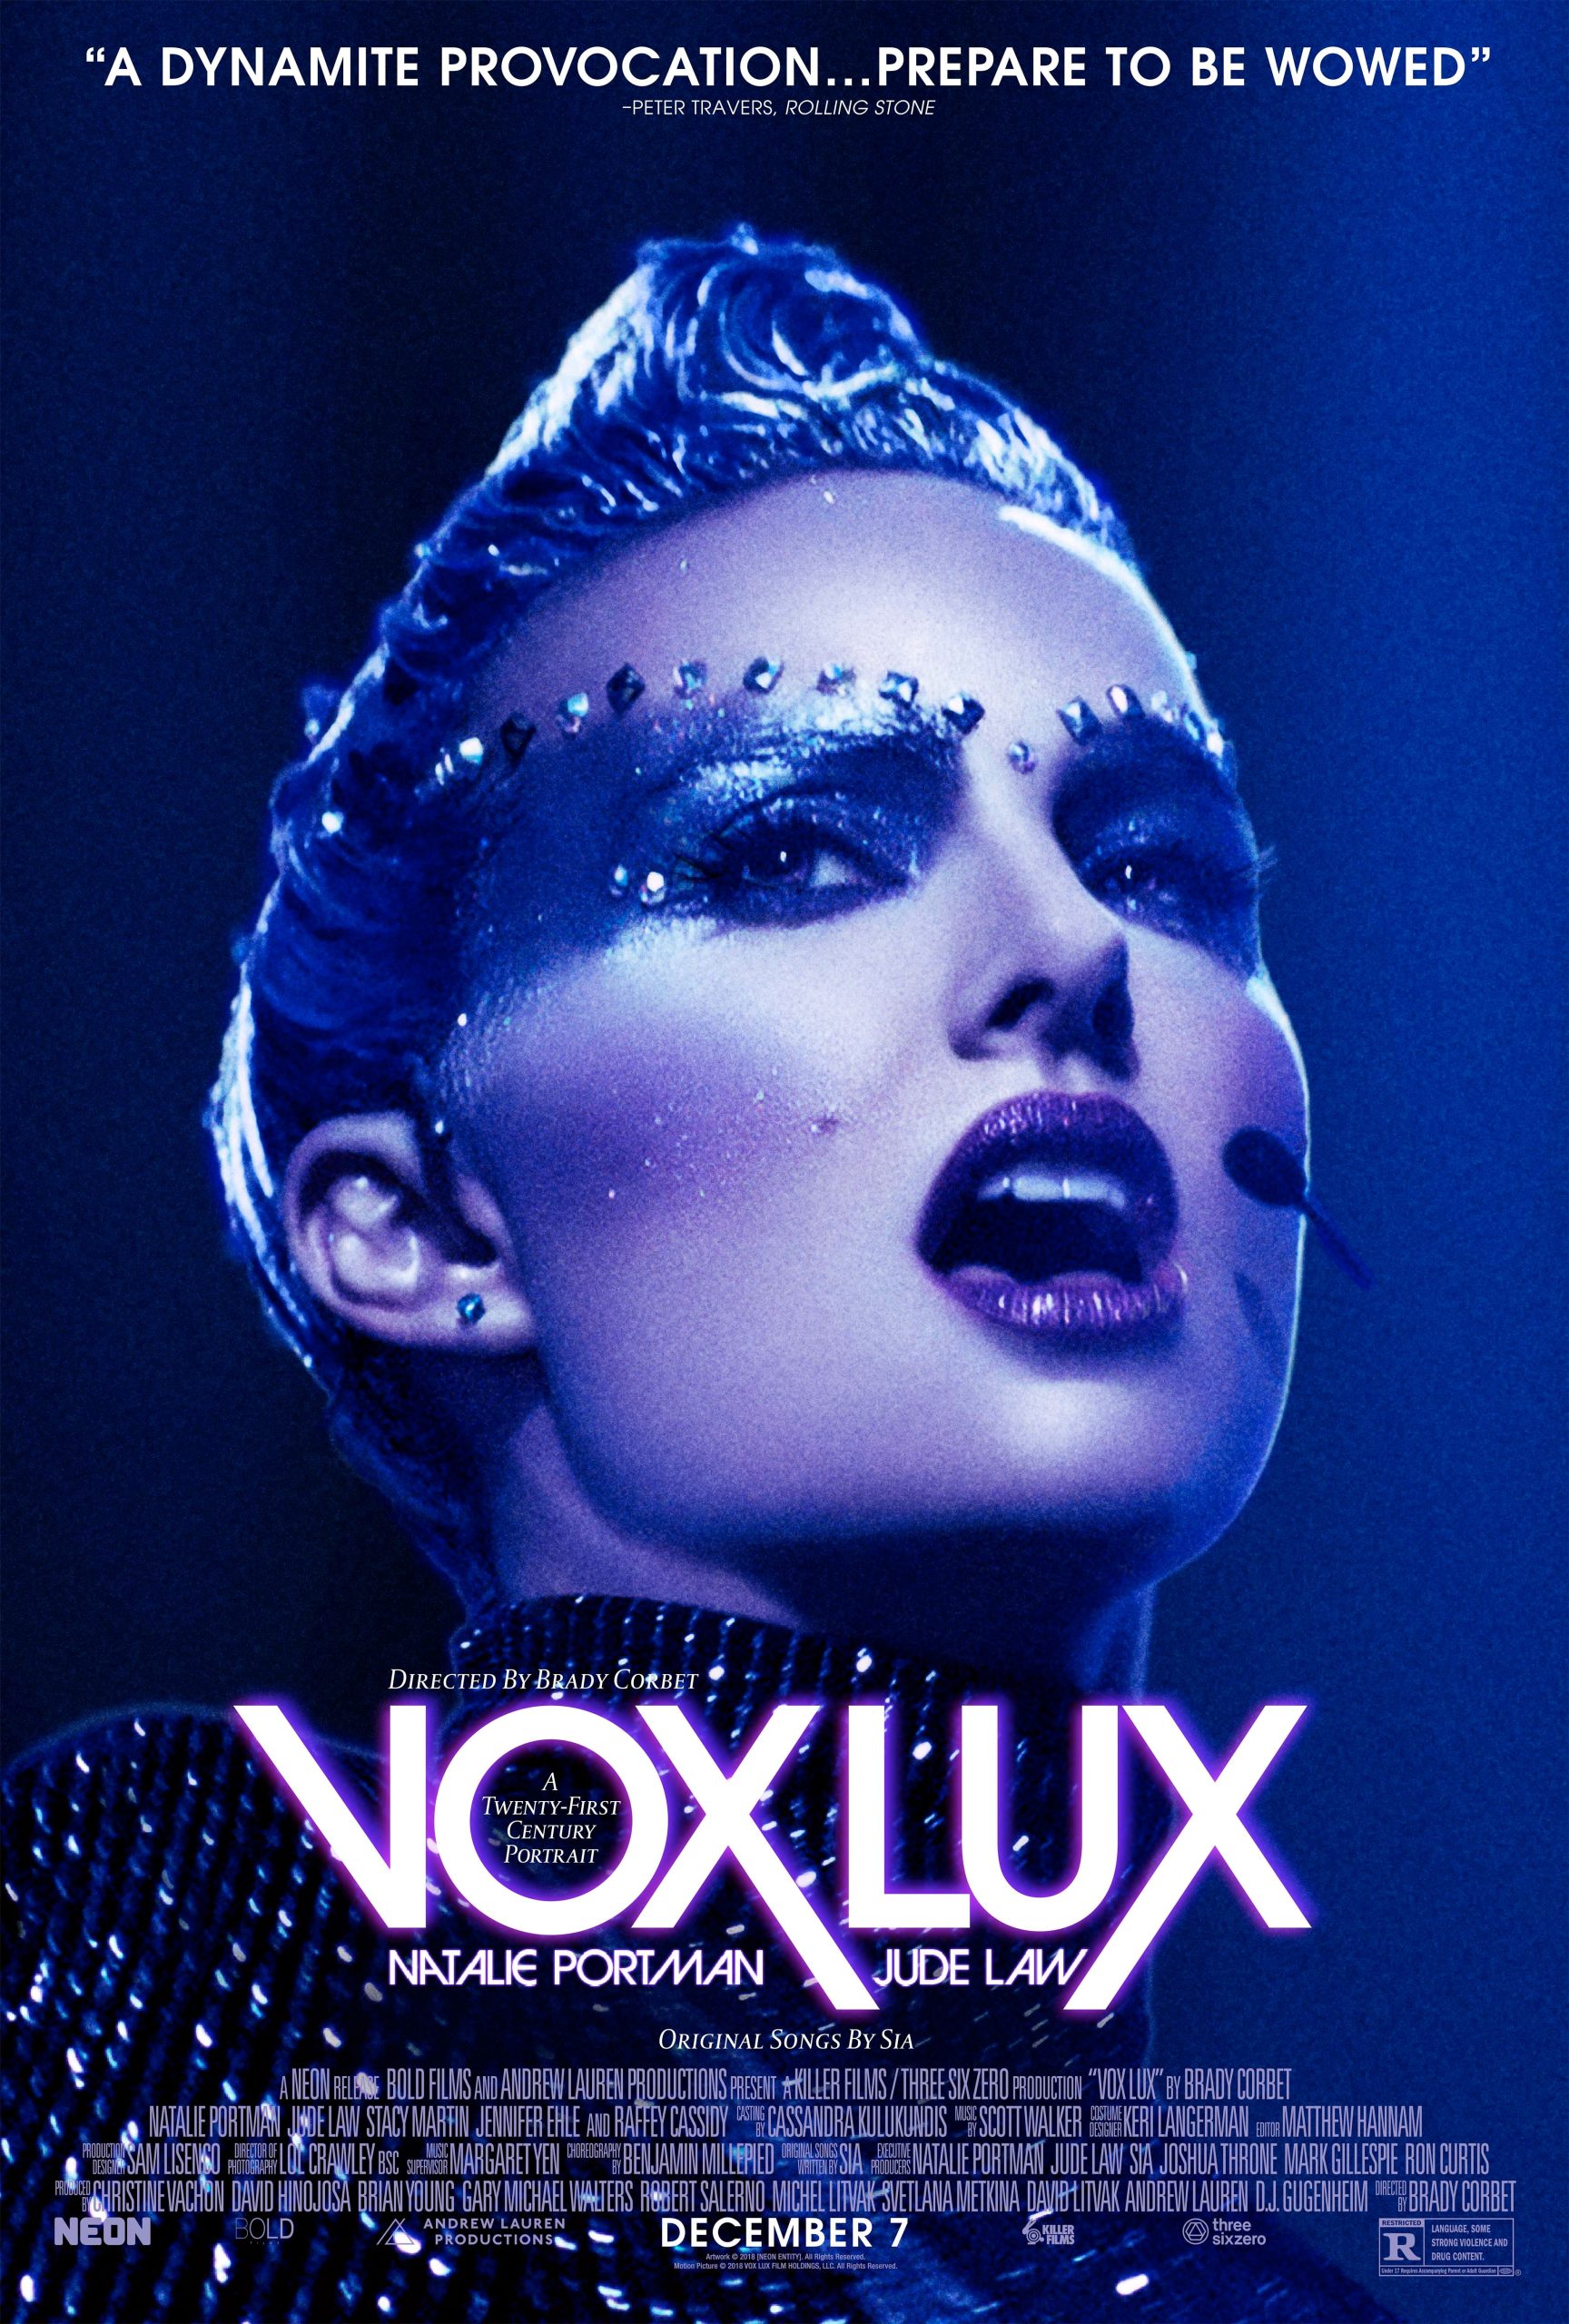 Vox Lux (2018) ว็อกซ์ ลักซ์ เกิดมาเพื่อร้องเพลง Natalie Portman